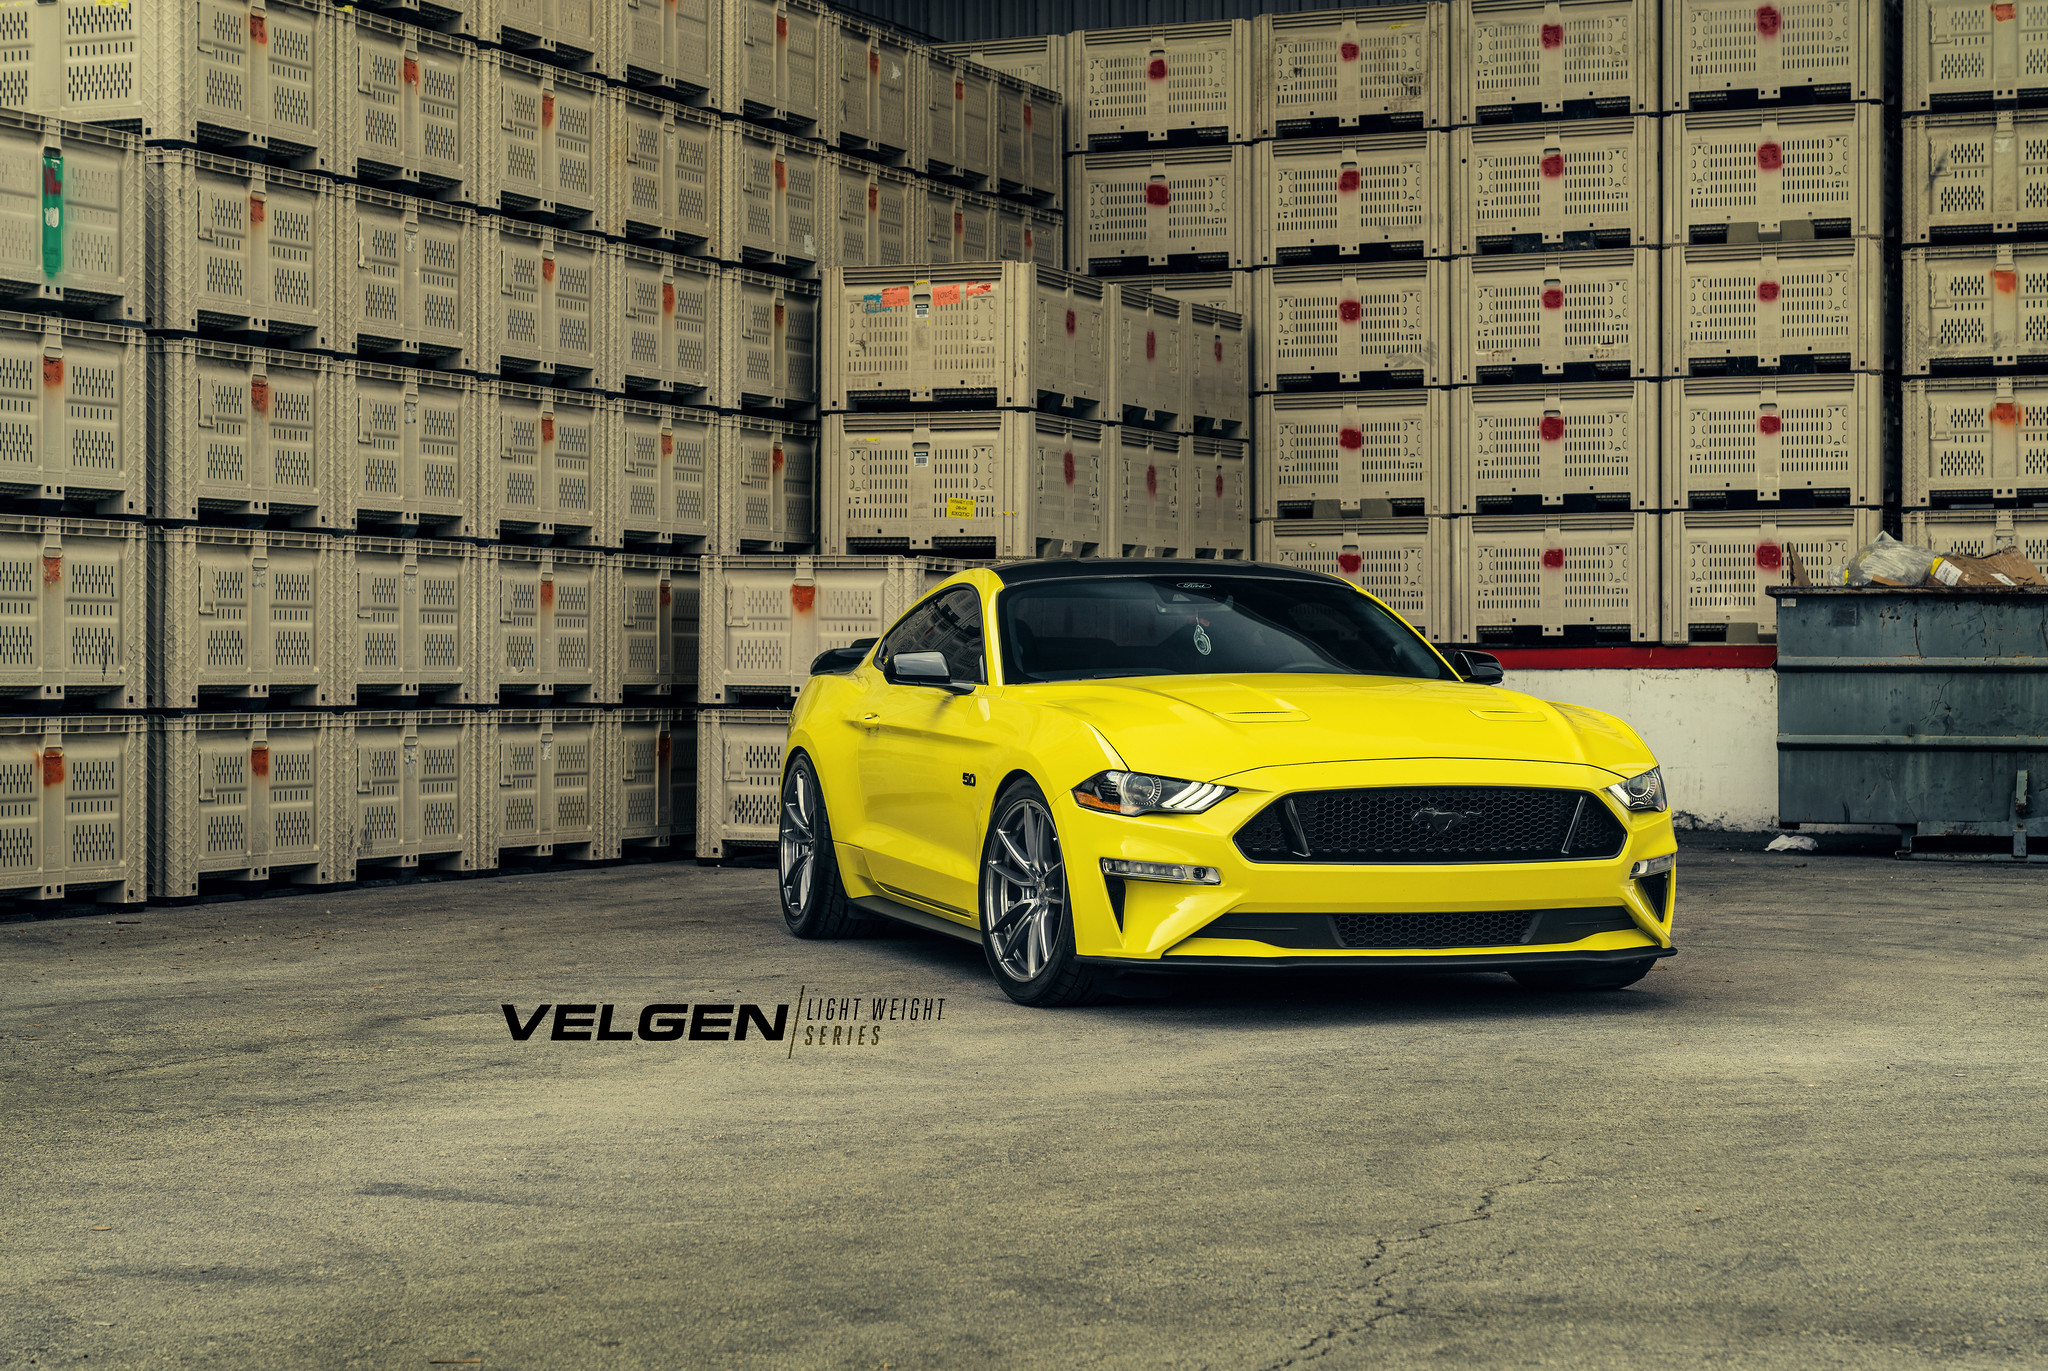 S650 Mustang Velgen wheels for your S650 Mustang | Vibe Motorsports 52563641065_c28c13ff42_k